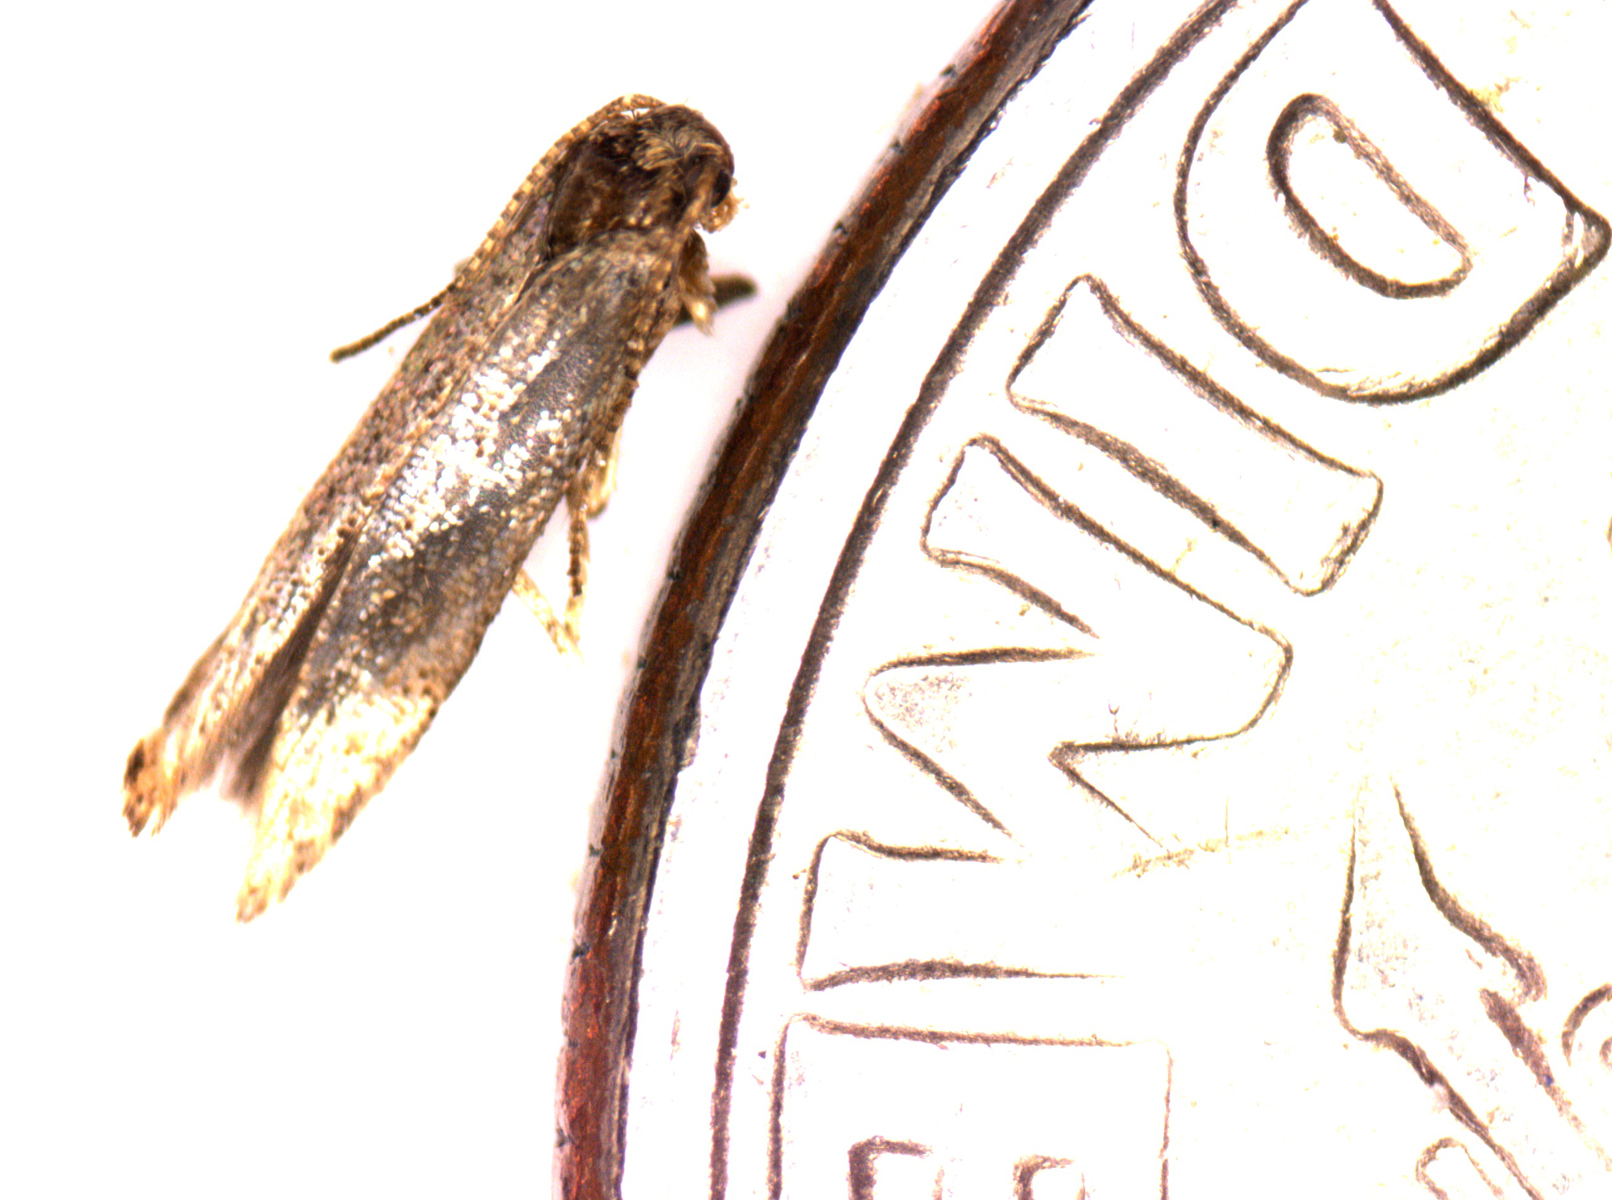 tomato leafminer moth alongside a dime